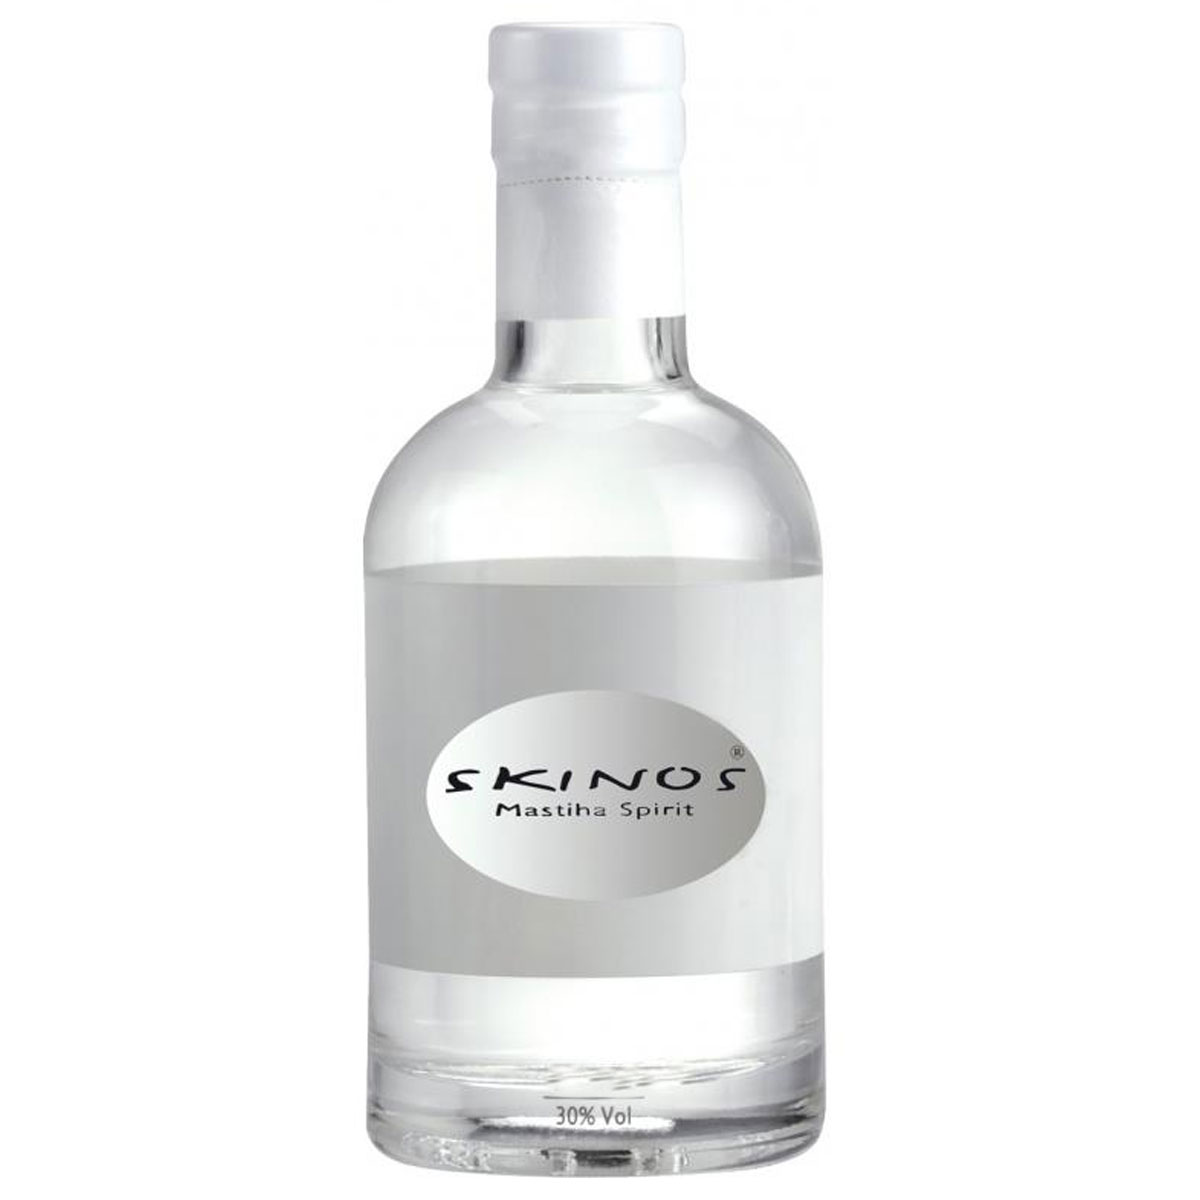 a bottle of skinos mastiha spirit